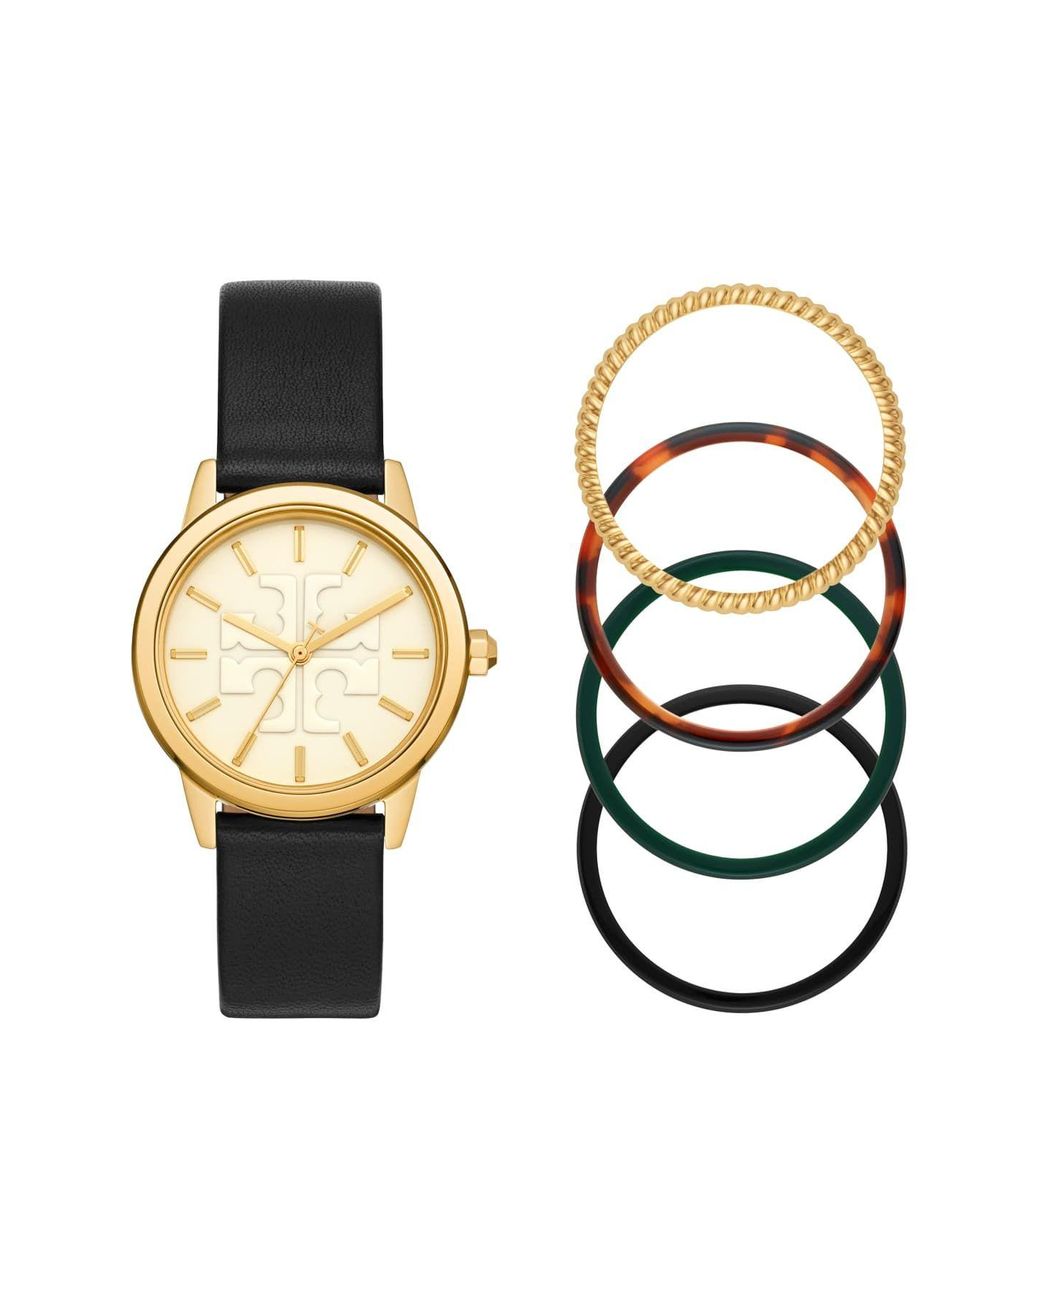 Tory Burch Gigi Watch Gift Set, Black Leather/multi-color/gold Tone, 36 Mm  | Lyst